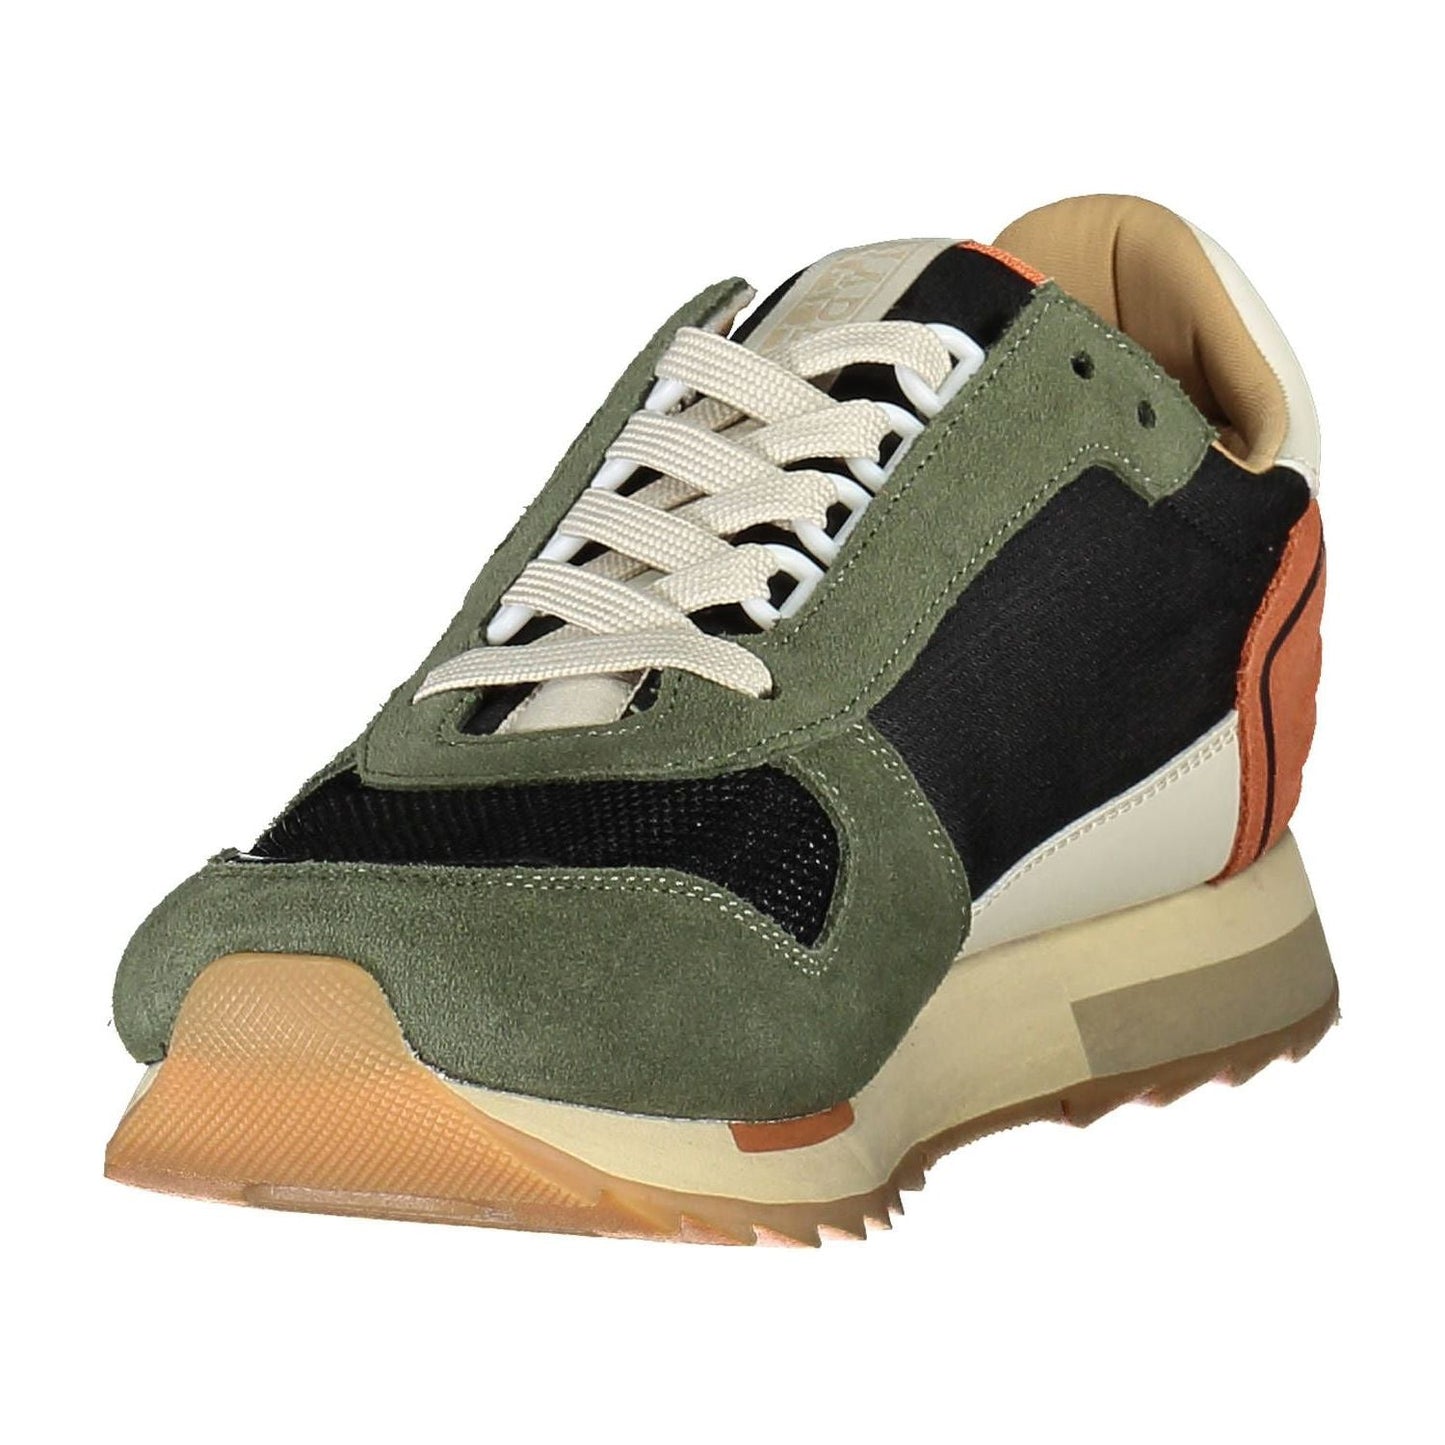 Napapijri Trendy Green Lace-Up Sneakers for the Modern Man trendy-green-lace-up-sneakers-for-the-modern-man